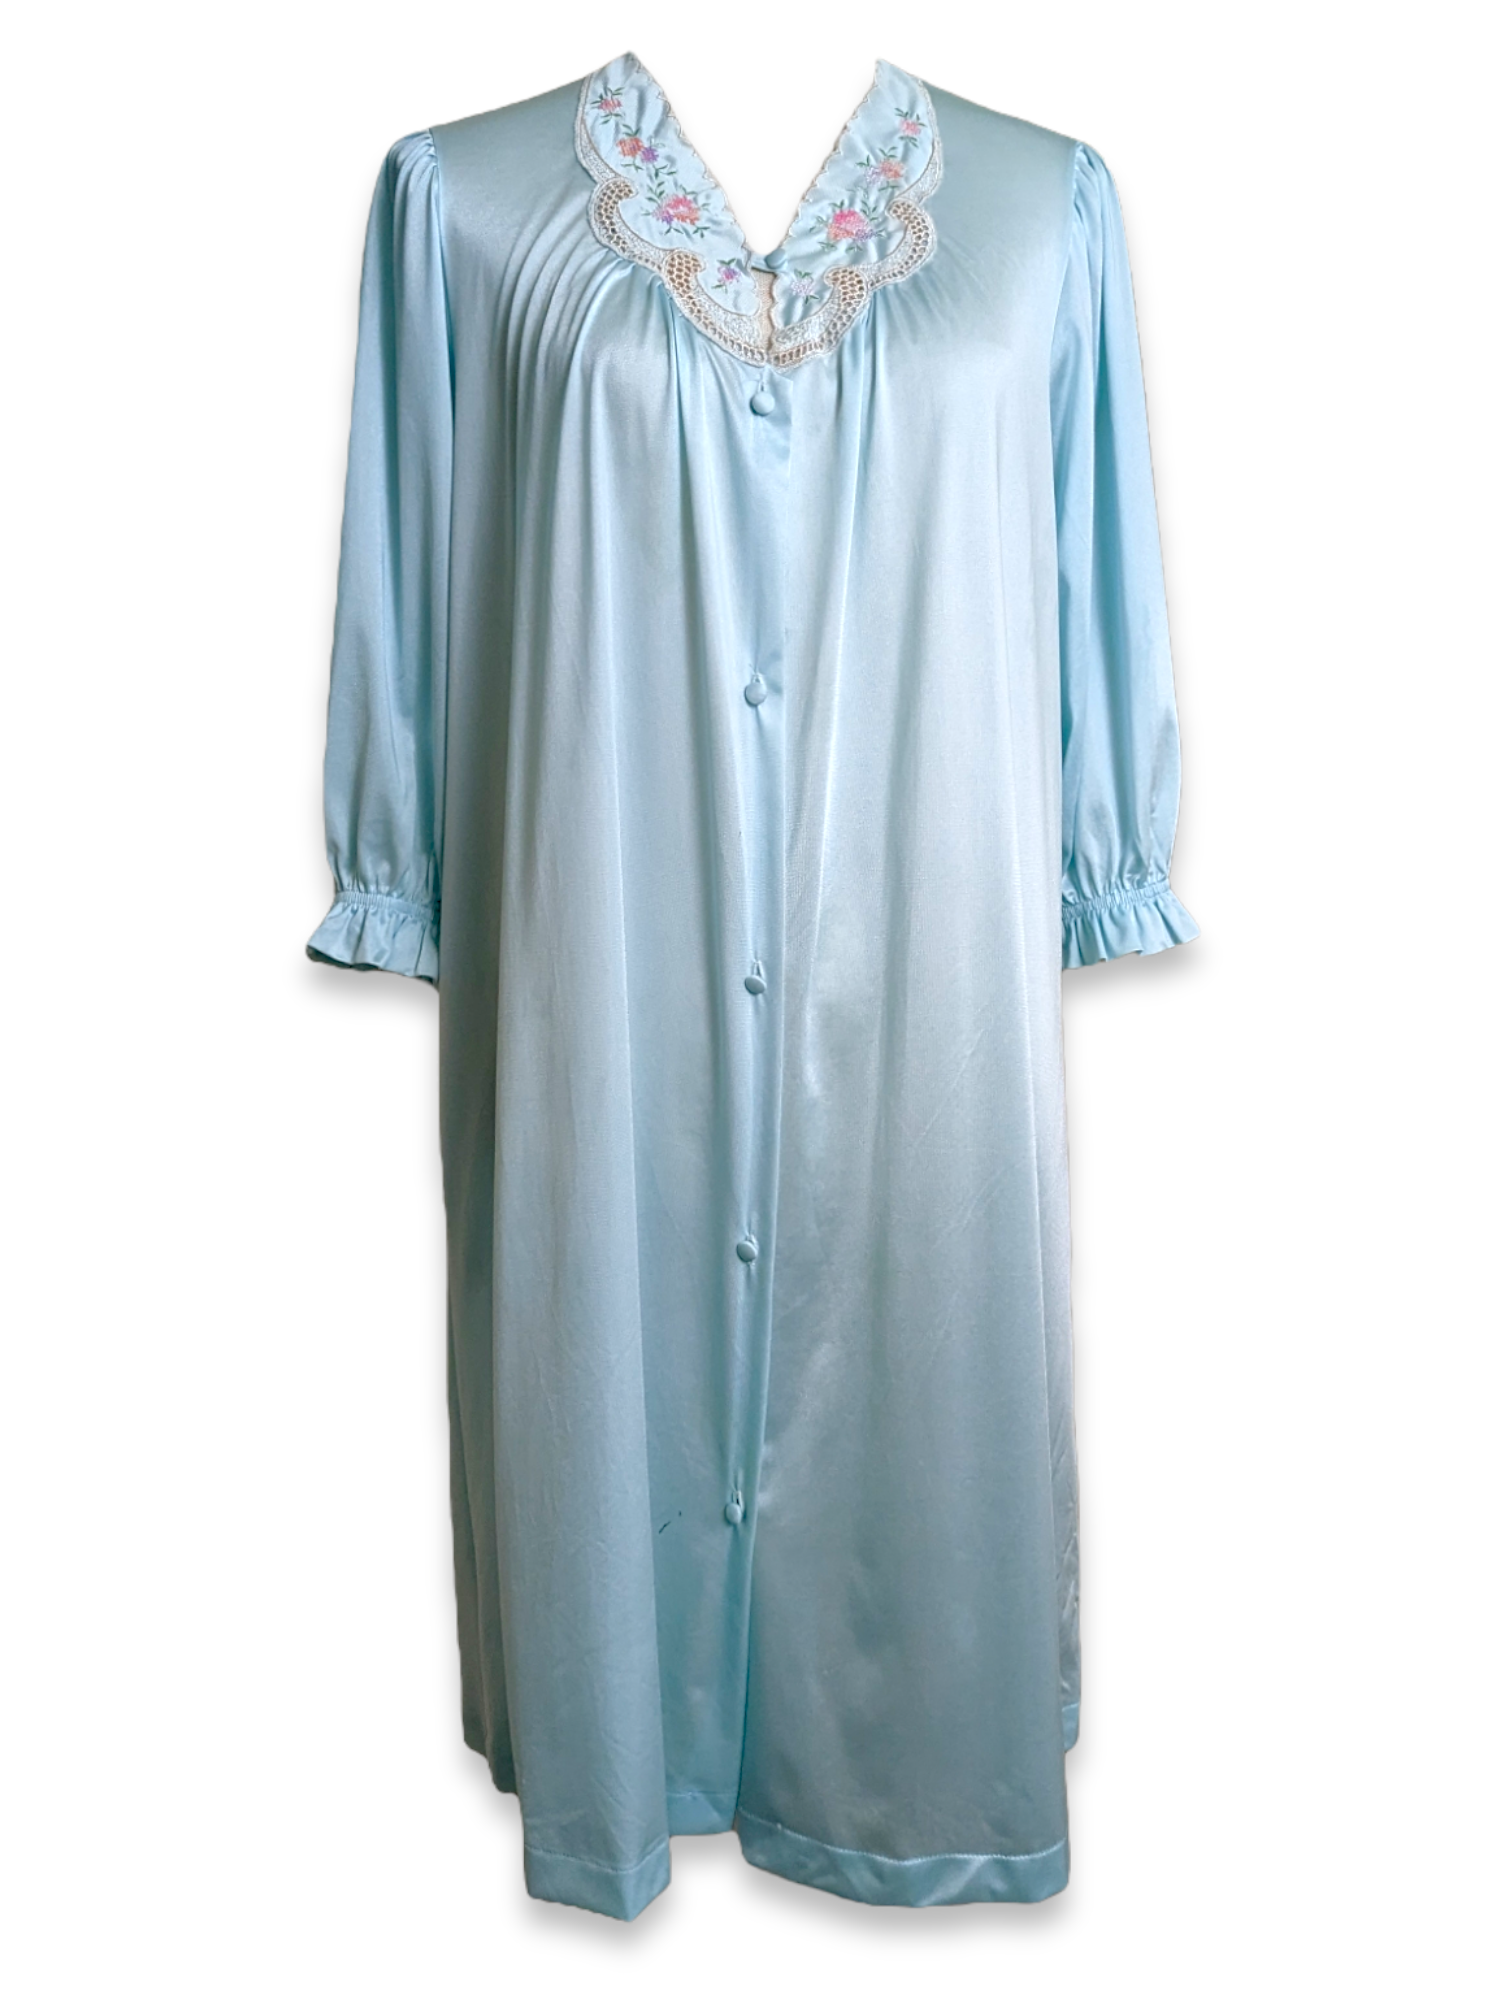 1980s Lorraine Pale Blue Muumuu Nightgown with Floral Cross Stitch Emb ...